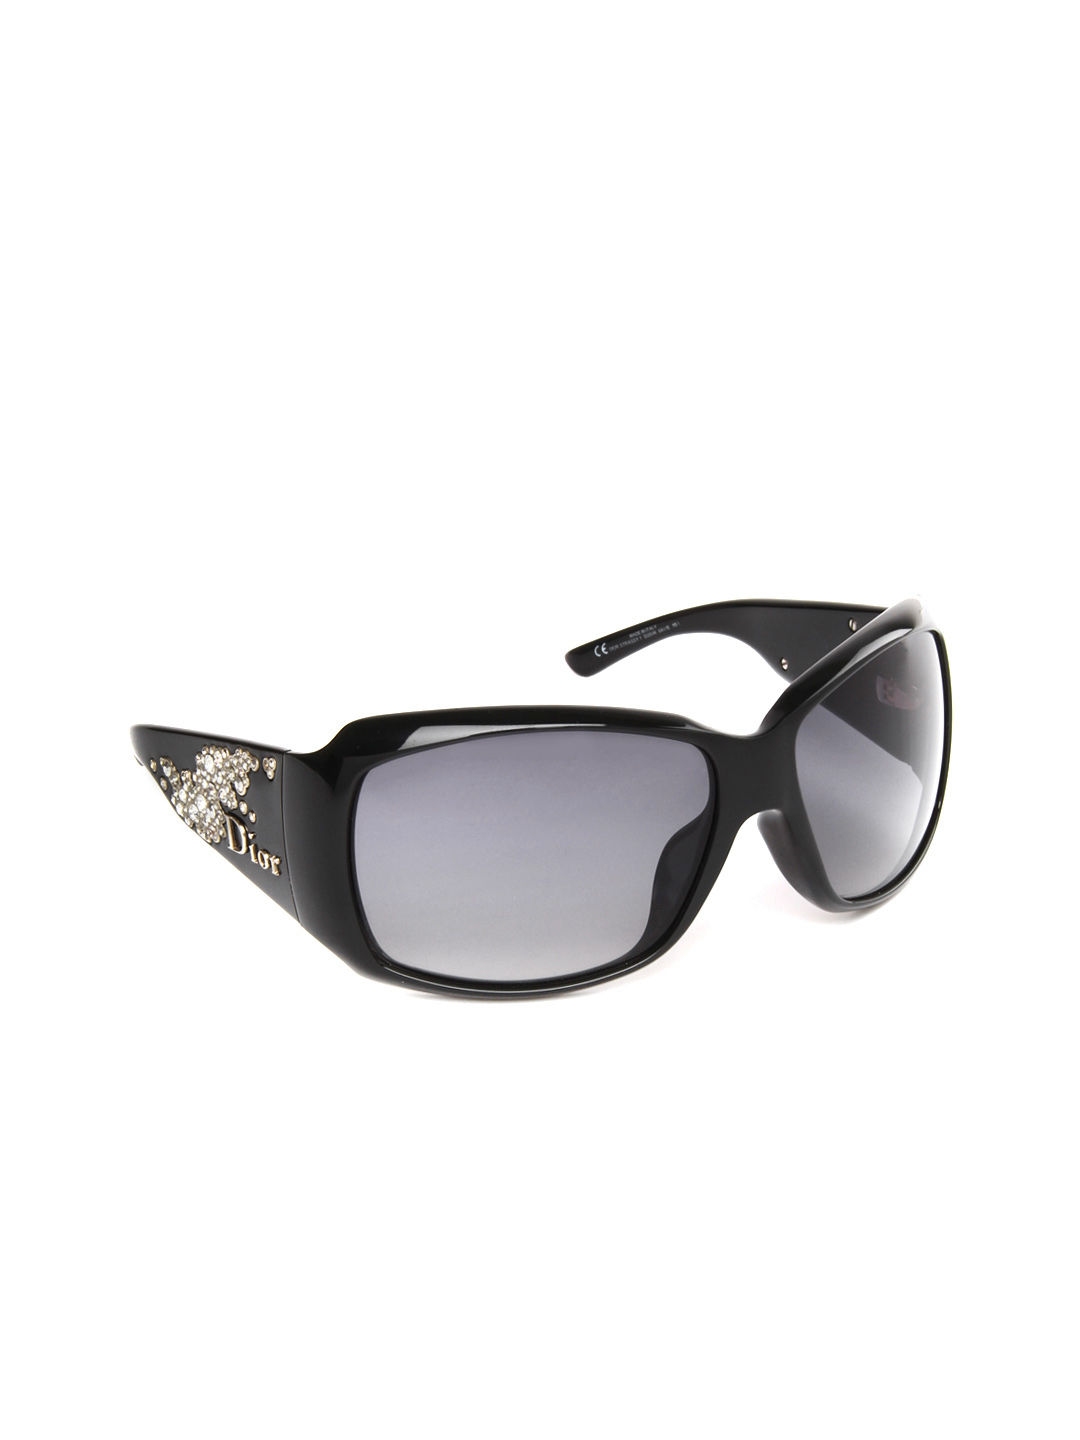 Dior Sunglasses Womens Fashion Watches  Accessories Sunglasses   Eyewear on Carousell